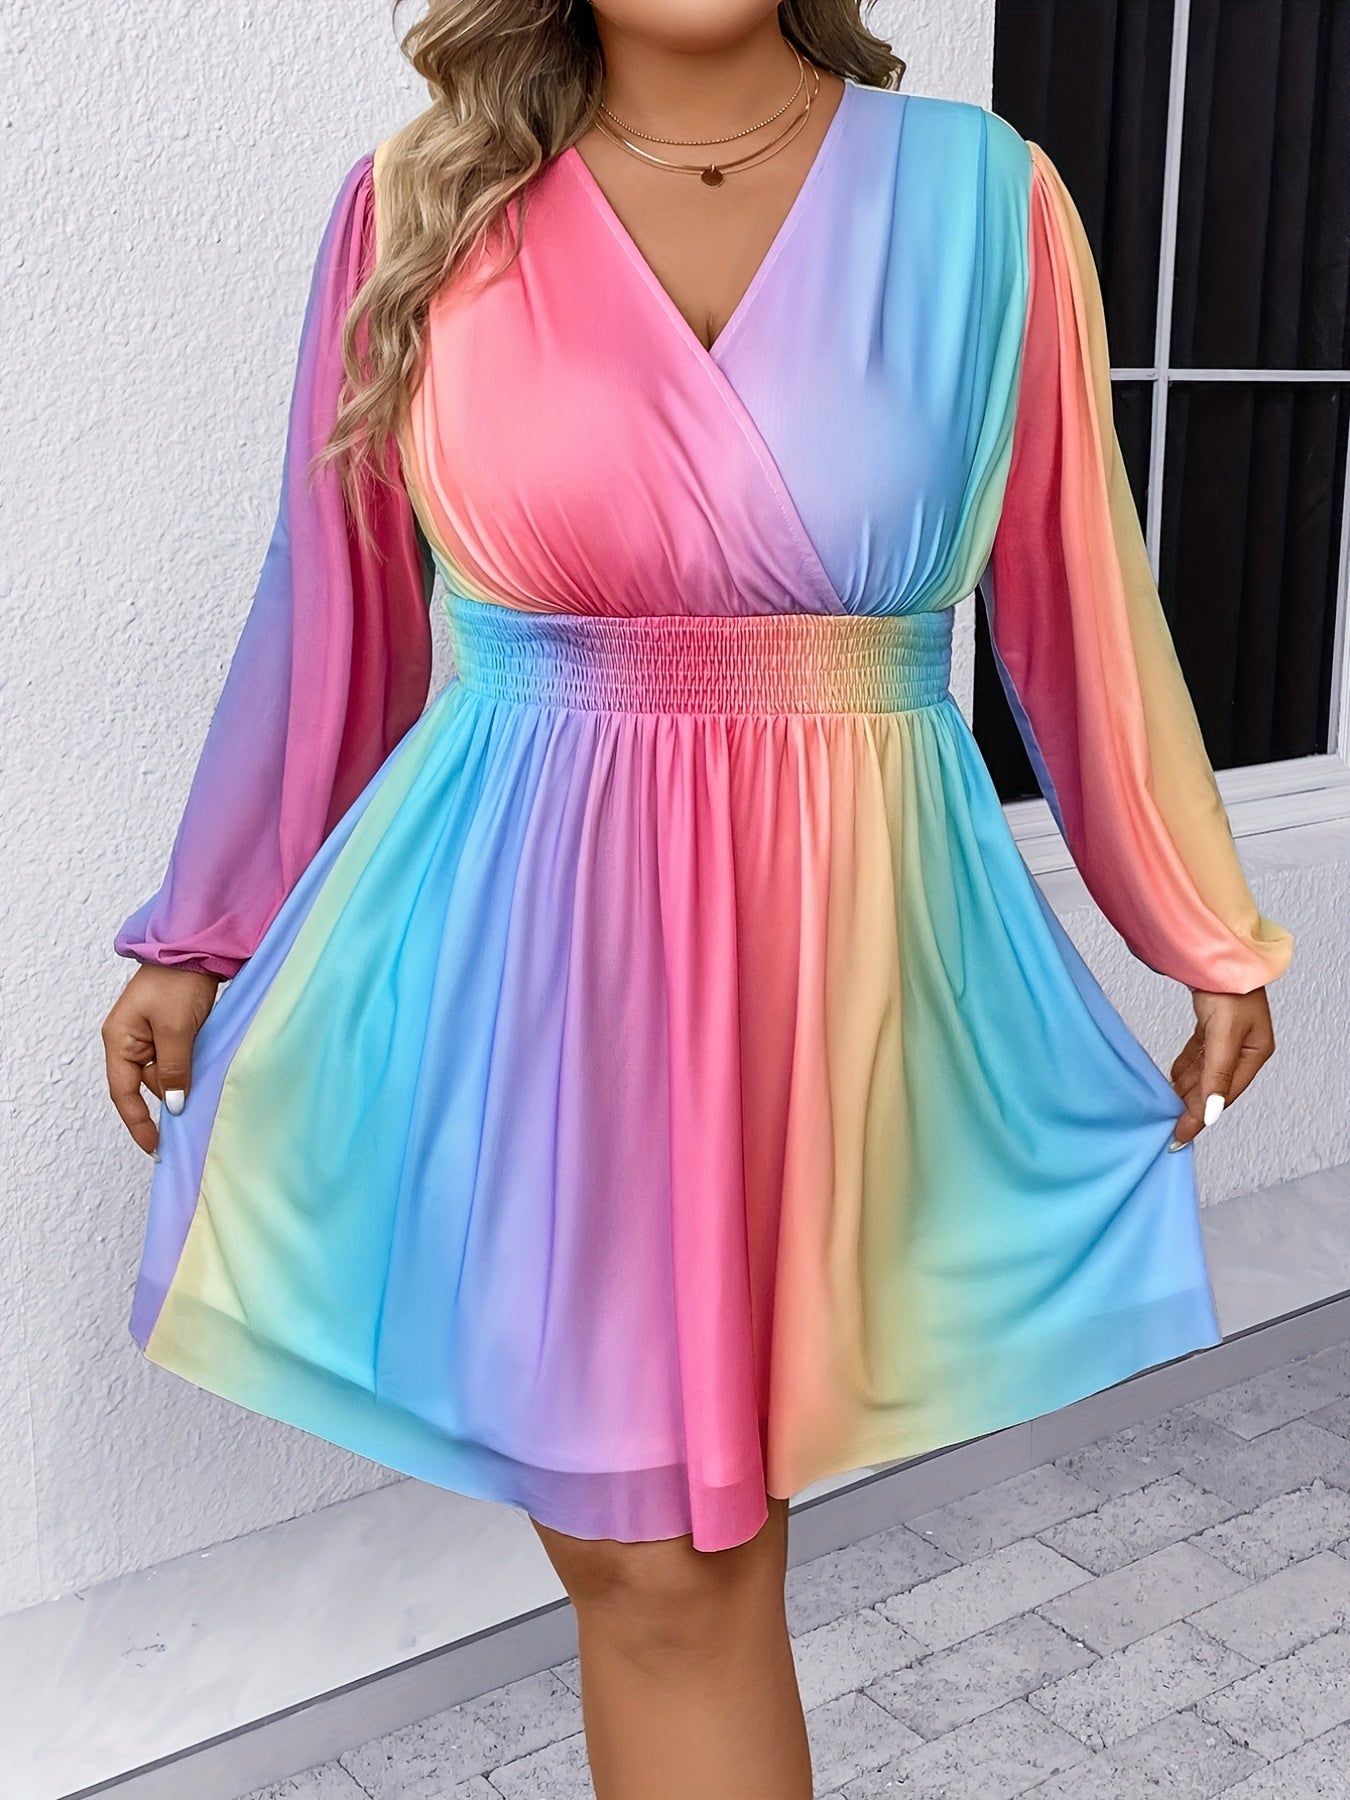 Antmvs Plus Size Casual Dress, Women's Plus Rainbow Color Contrast Mesh Long Sleeve Surplice Neck Shirred Waist Slight Stretch Layered Dress